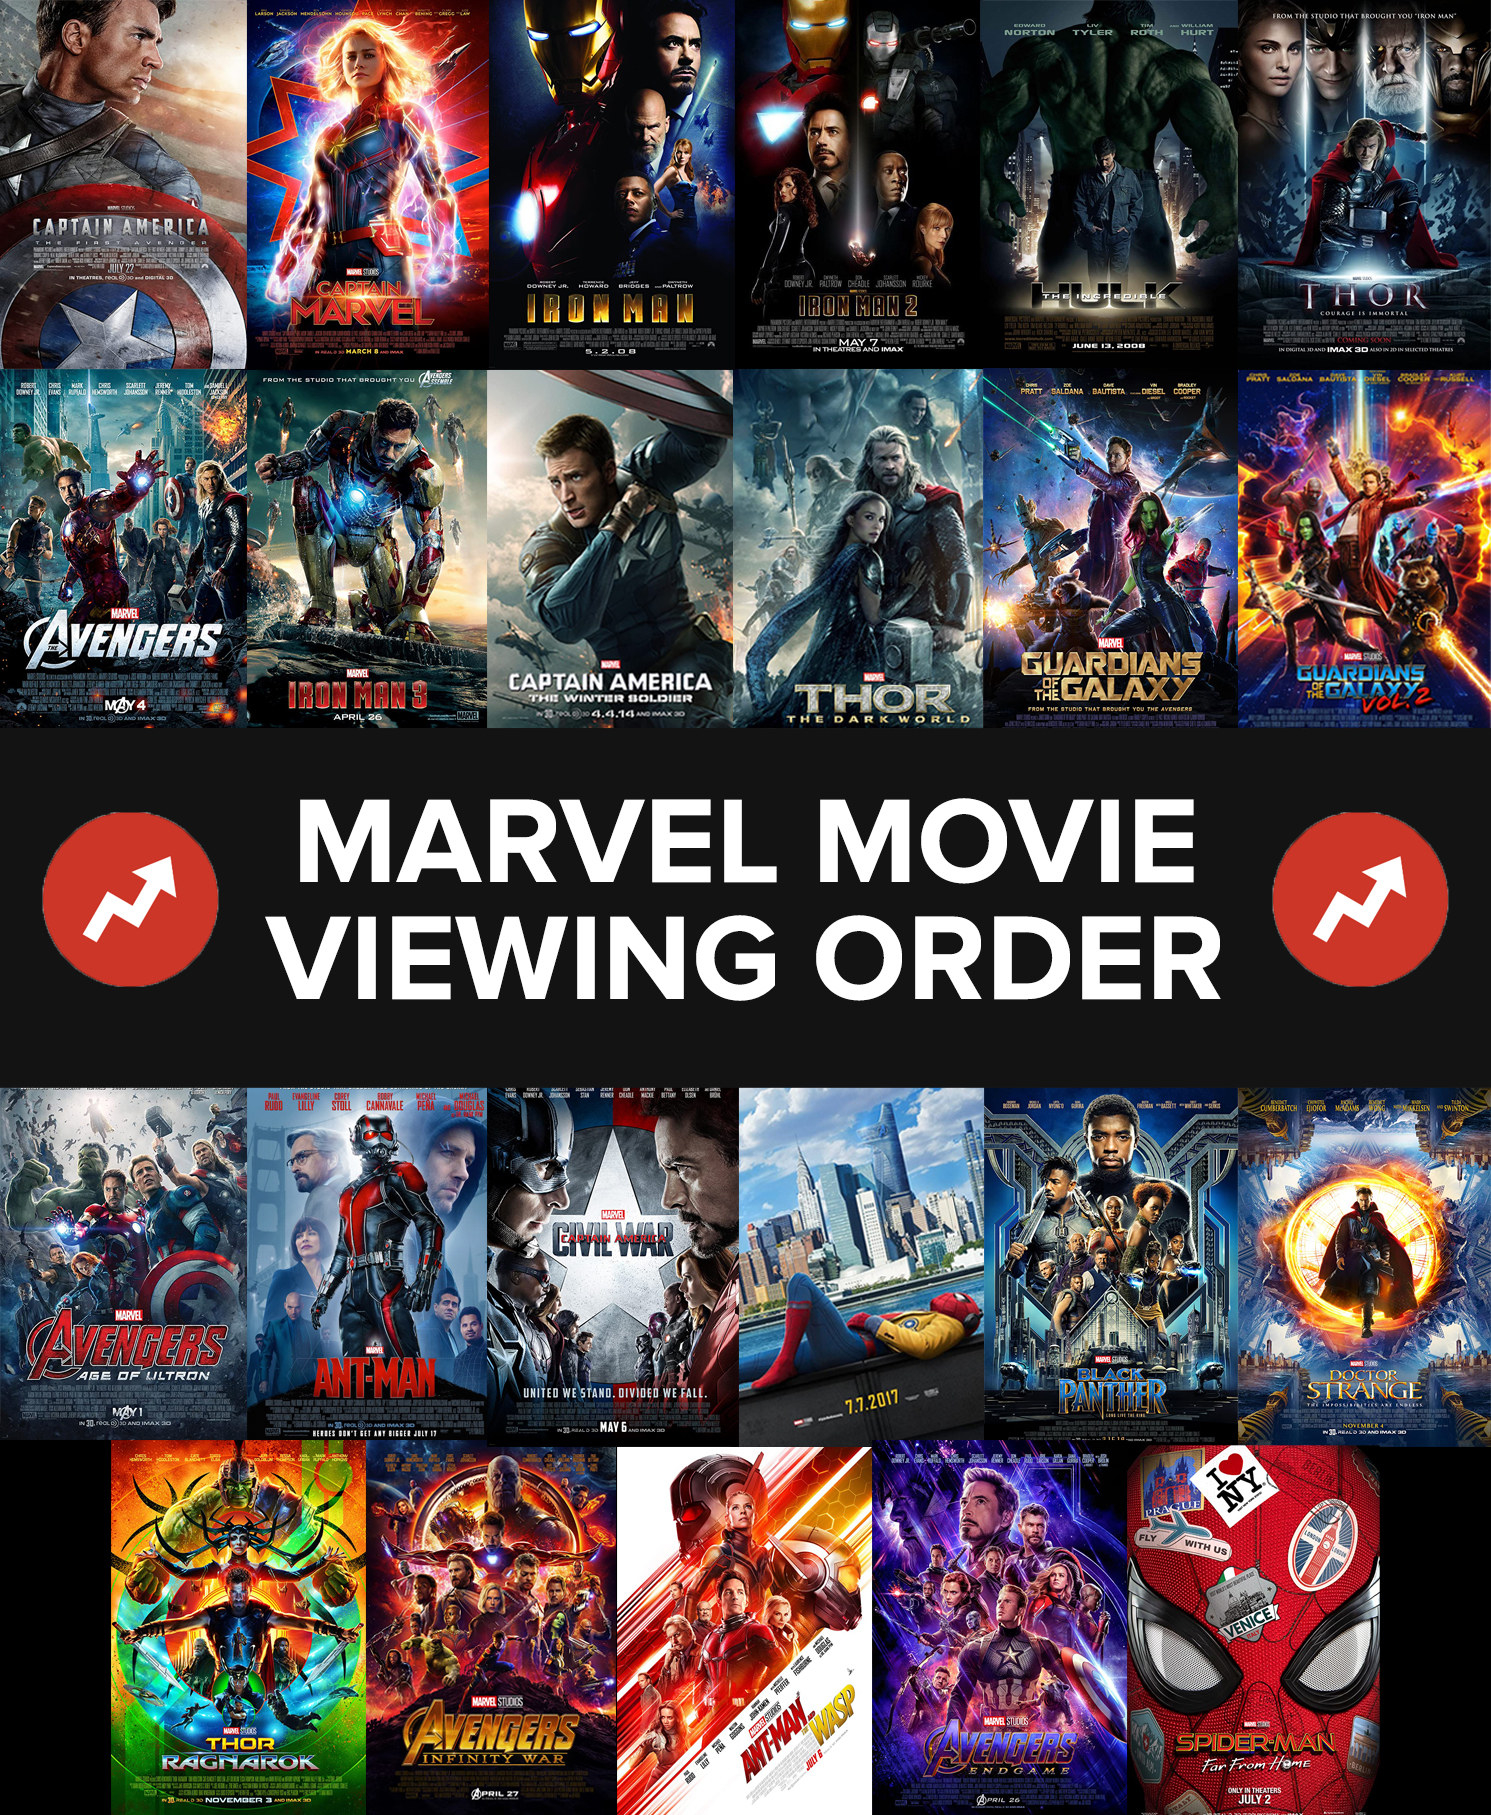 Marvel movies